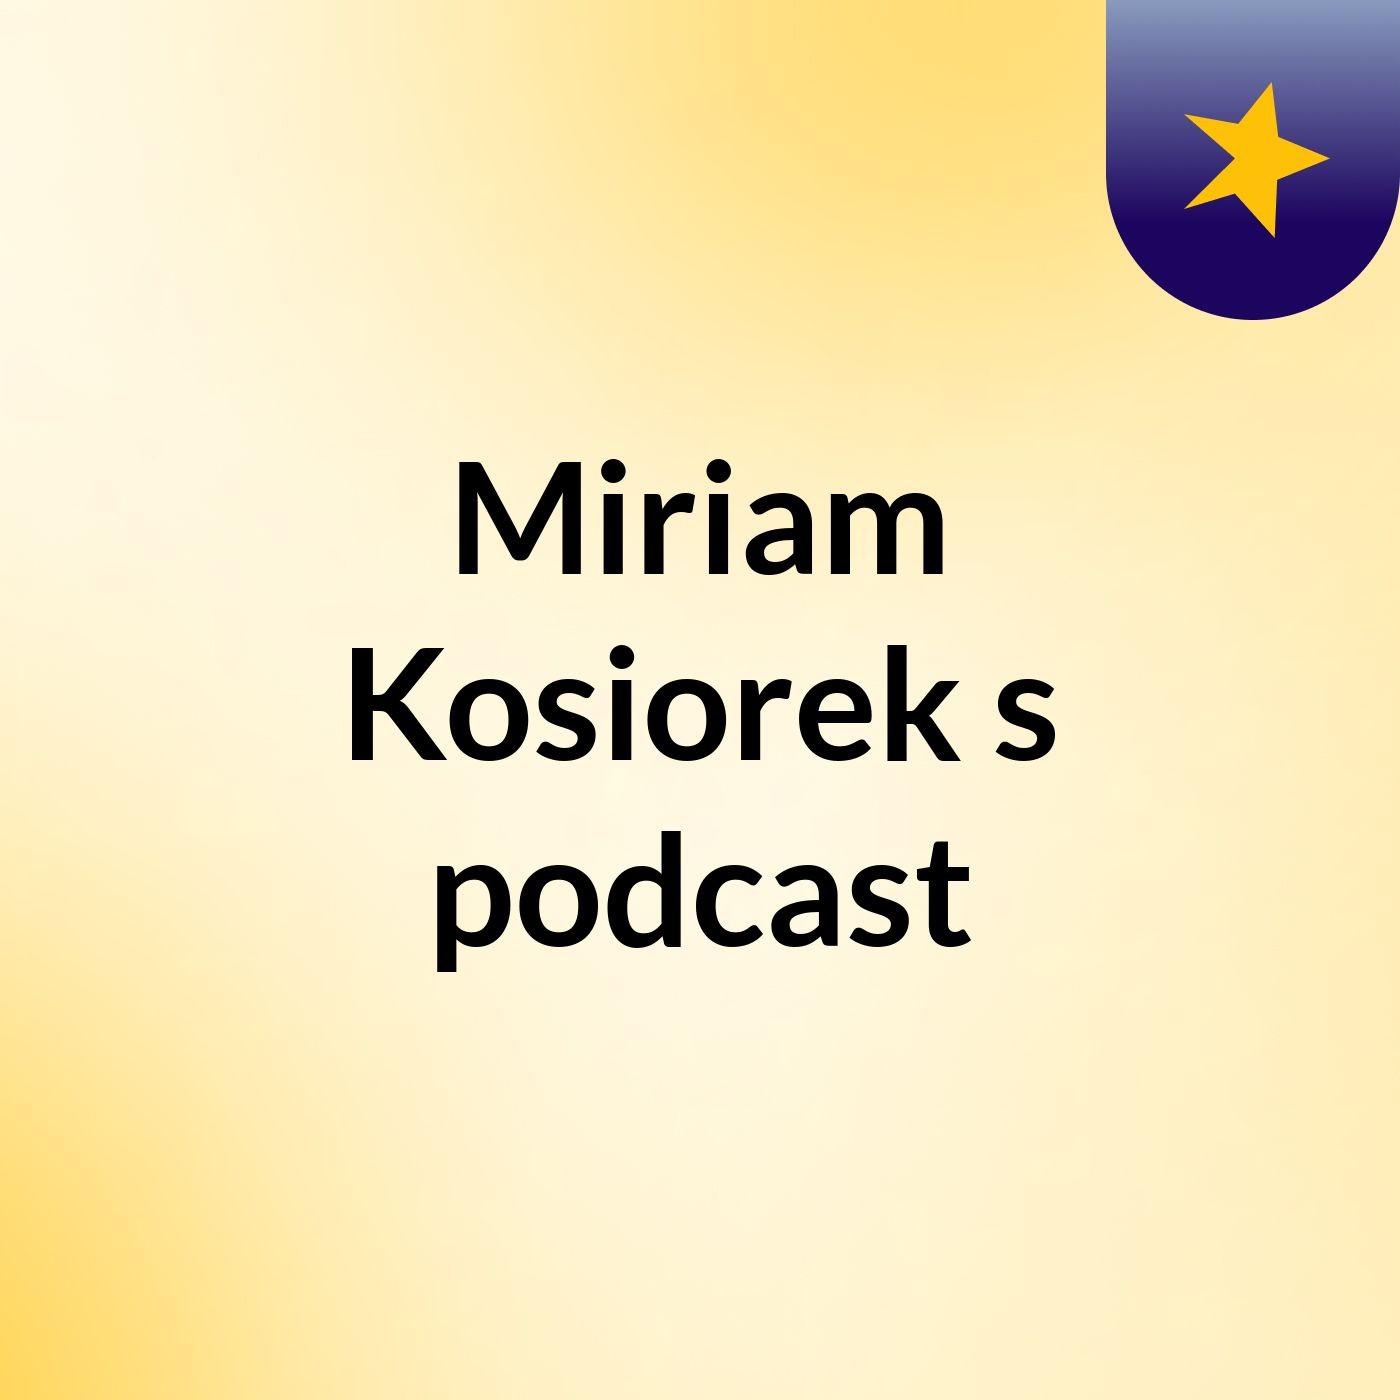 Miriam Kosiorek's podcast